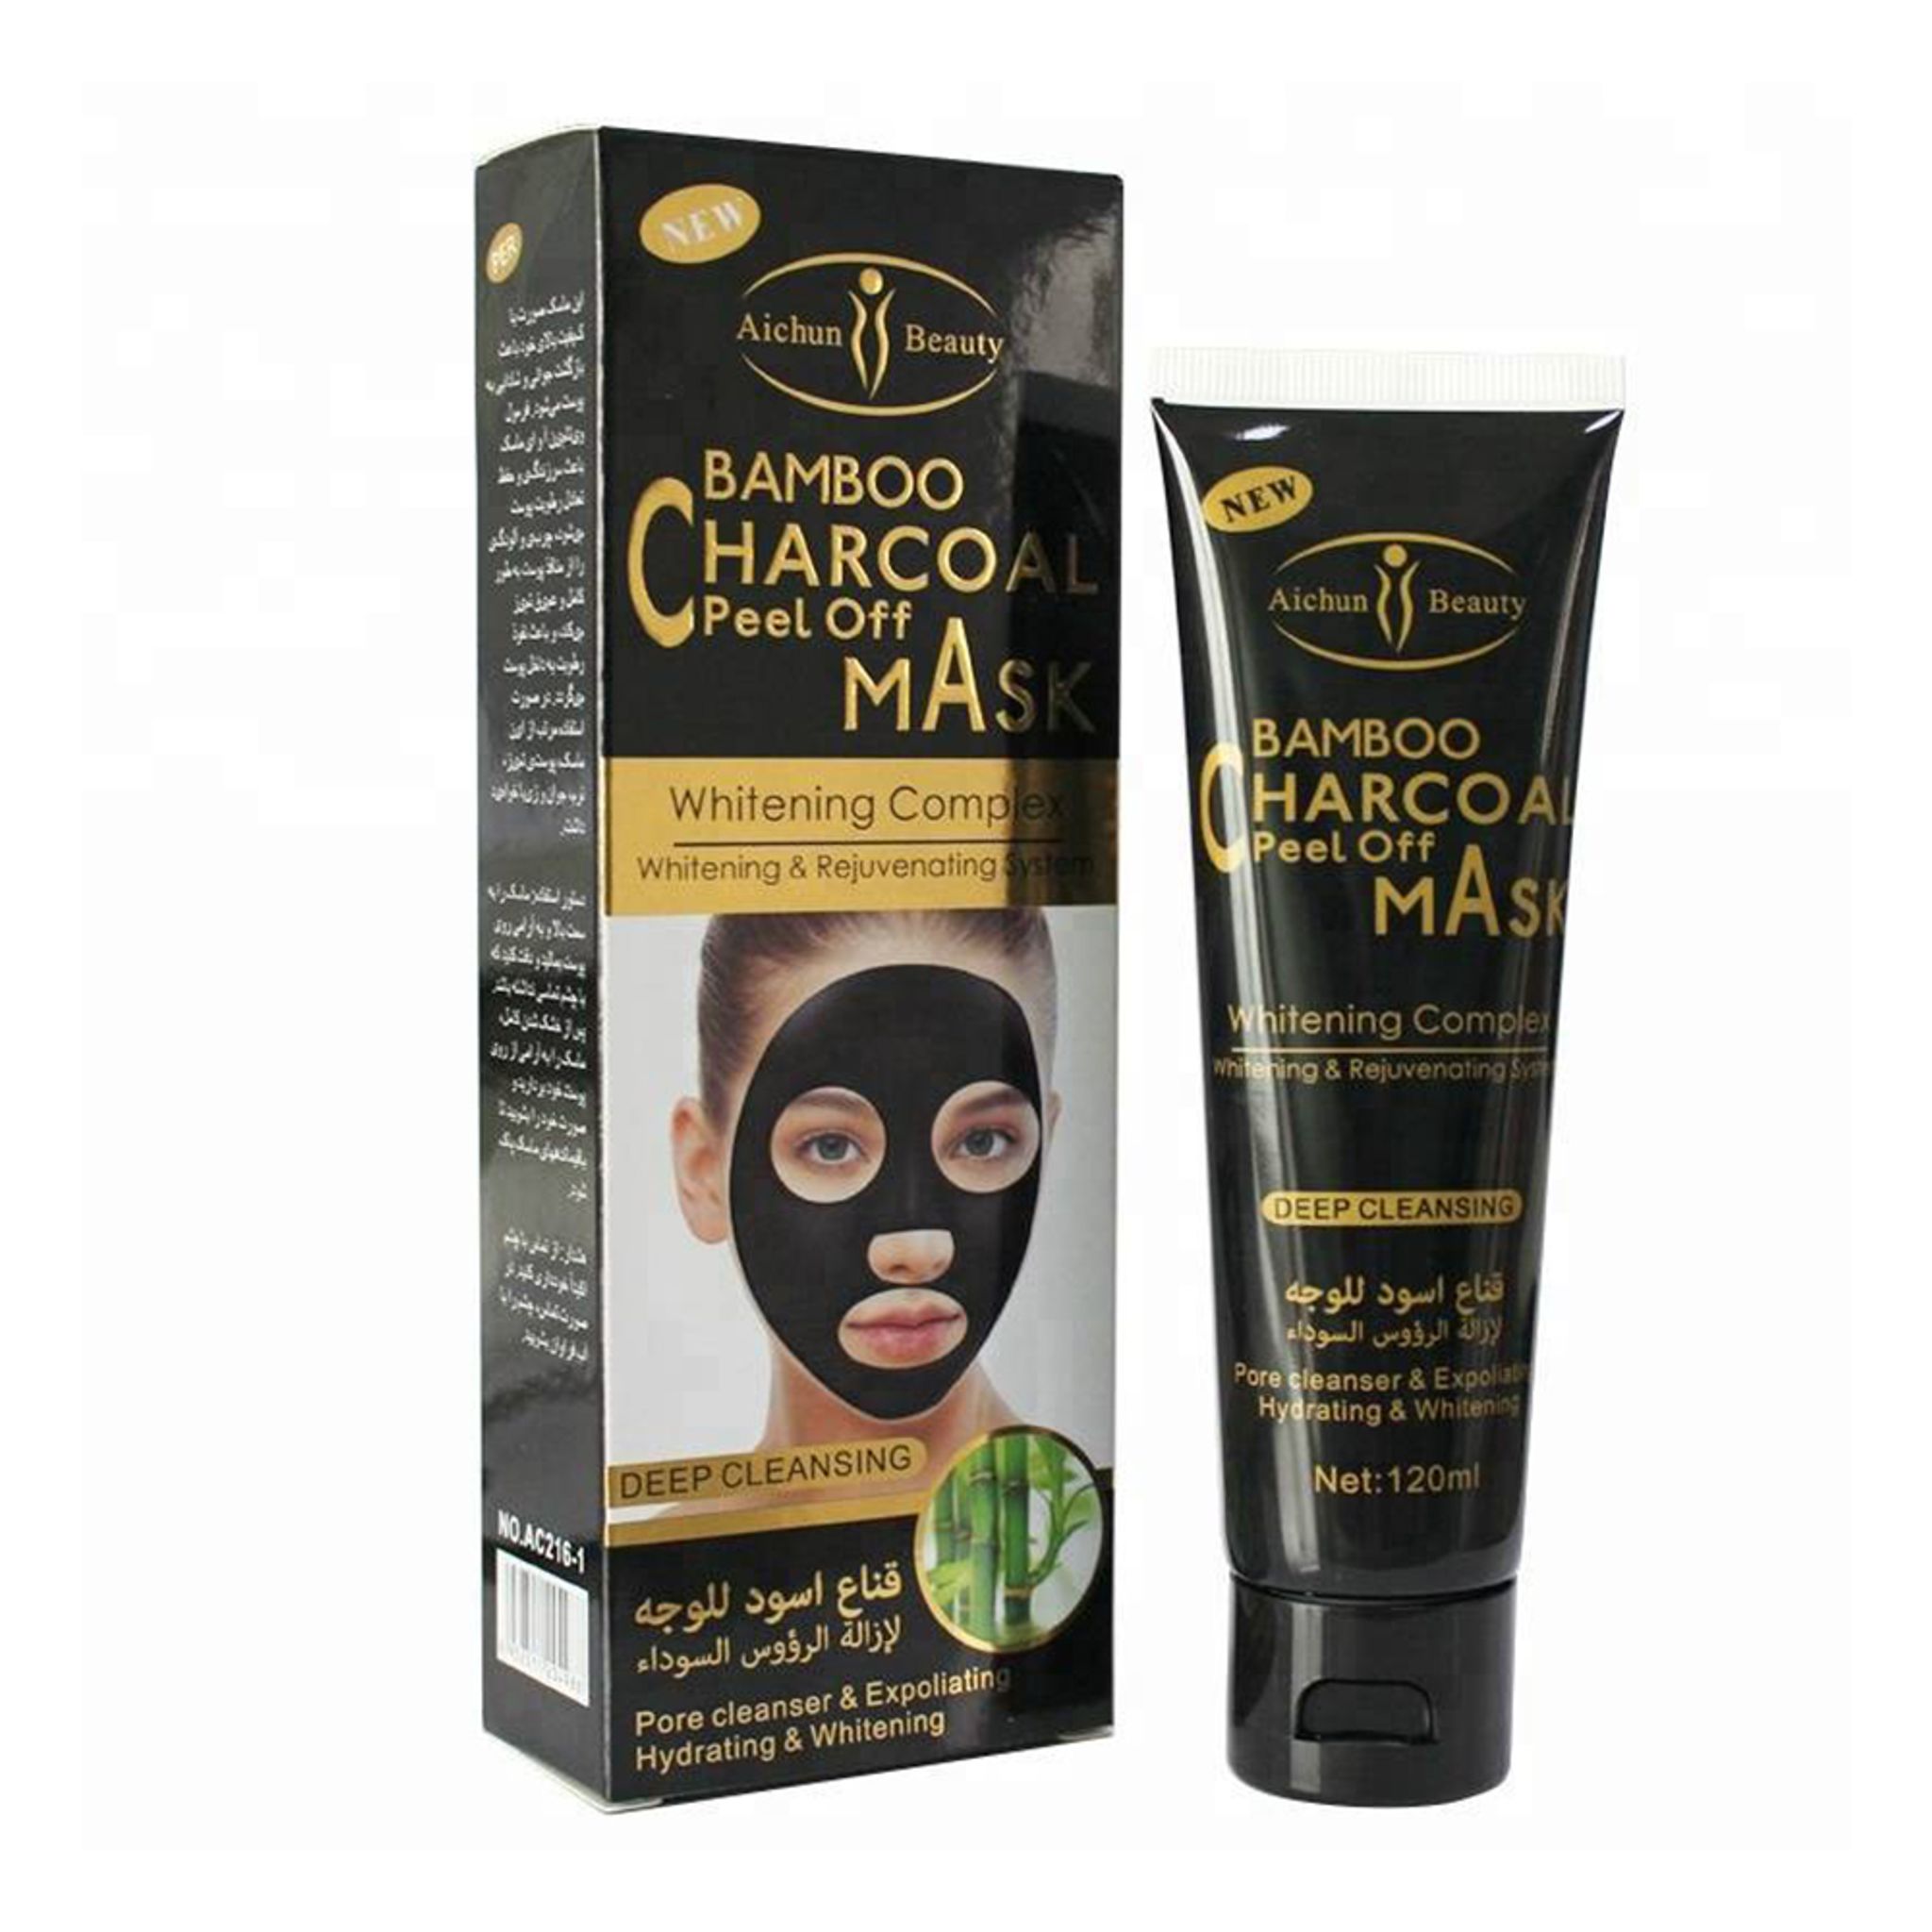 Aichun Beauty Bamboo Charcoal Peel Off Mask 120ml - 1Sell